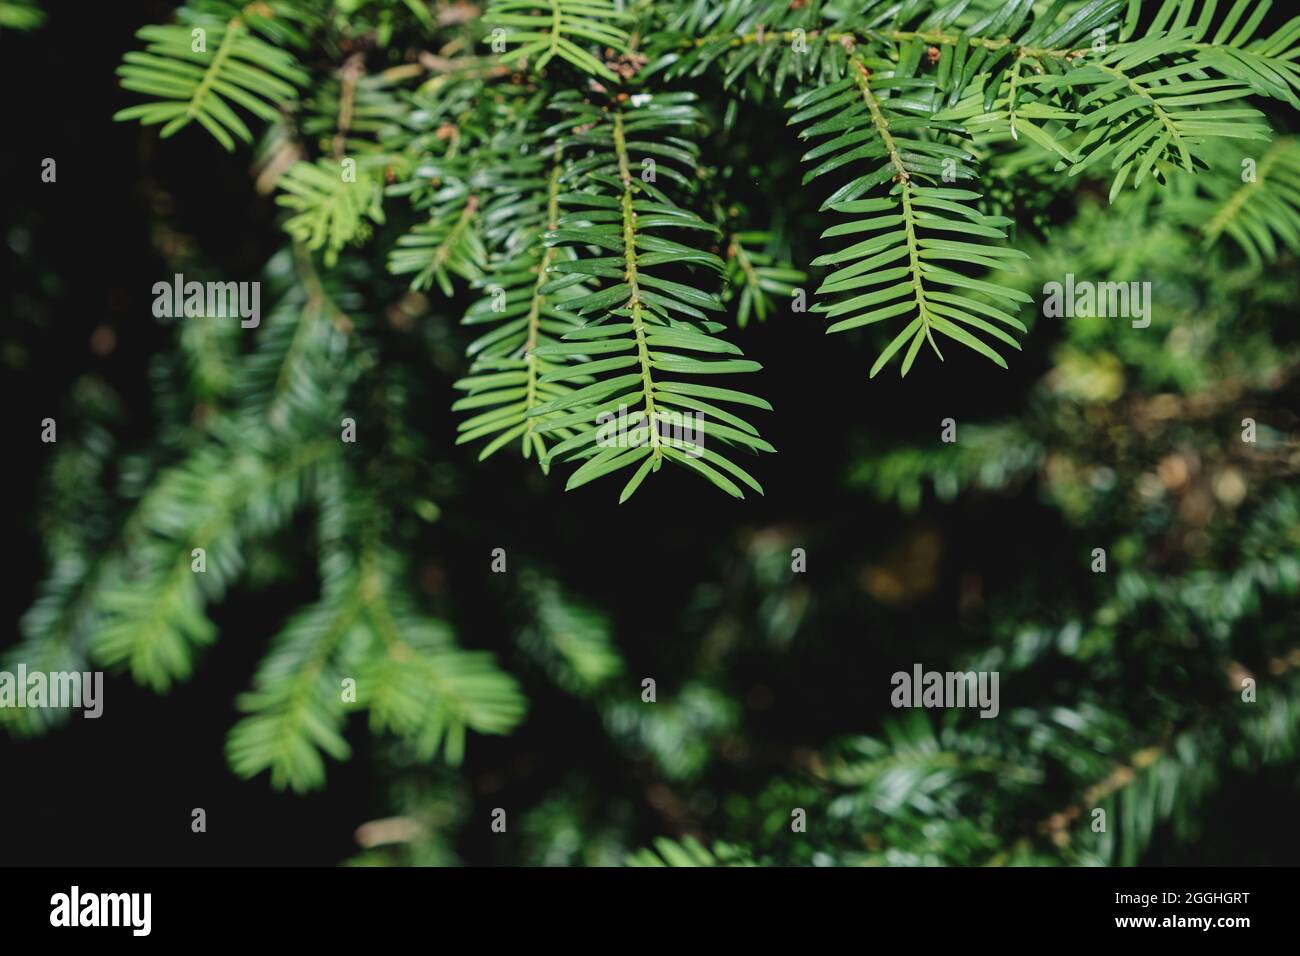 Taxus Baccata or European yew evergreen poisonous foliage close up Stock Photo